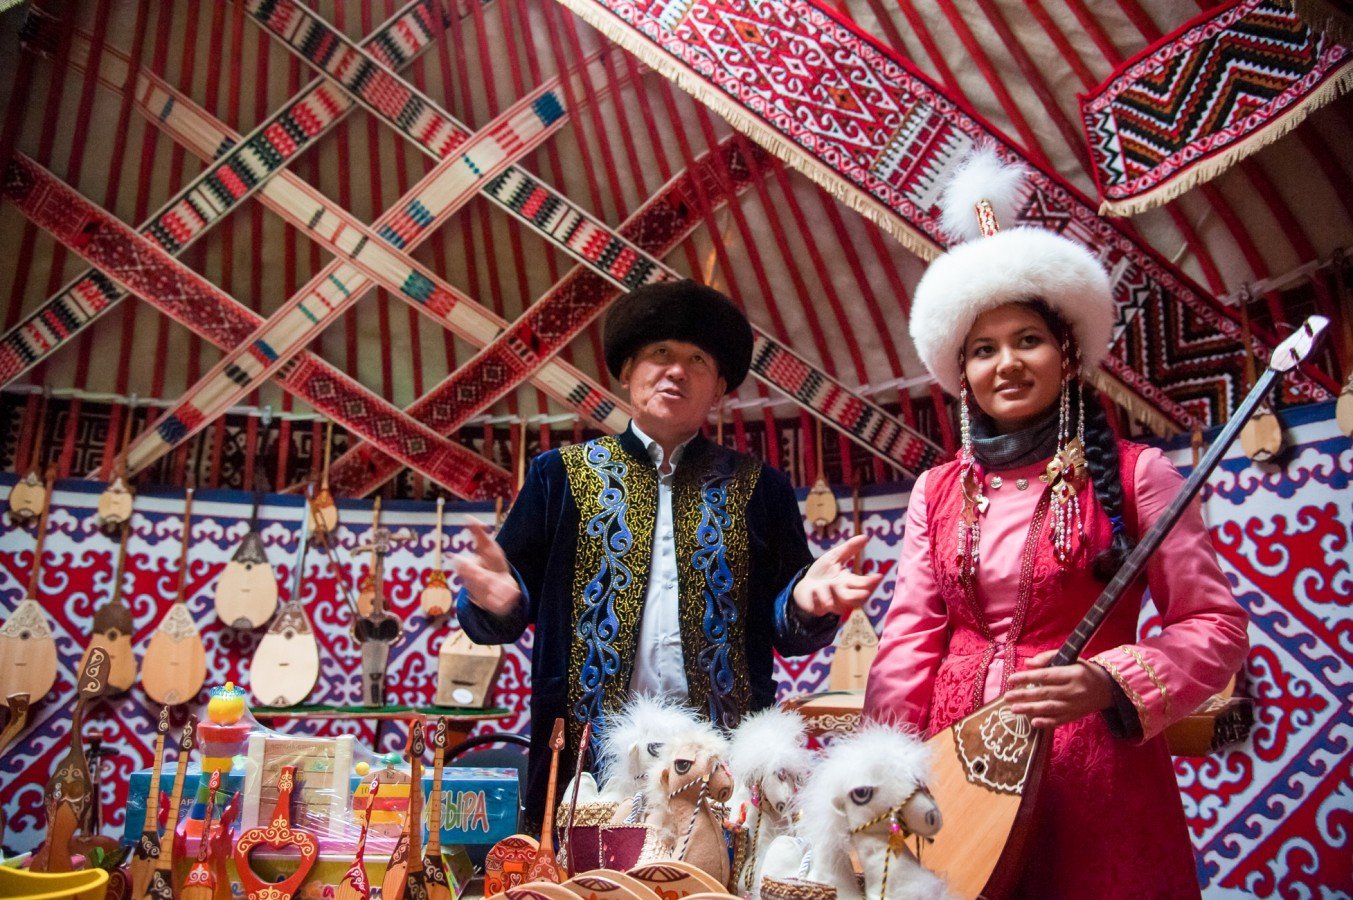 Kazakh traditions. Казахи народ. Казахская культура. Казахстан традиции и обычаи. Национальные традиции казахов.